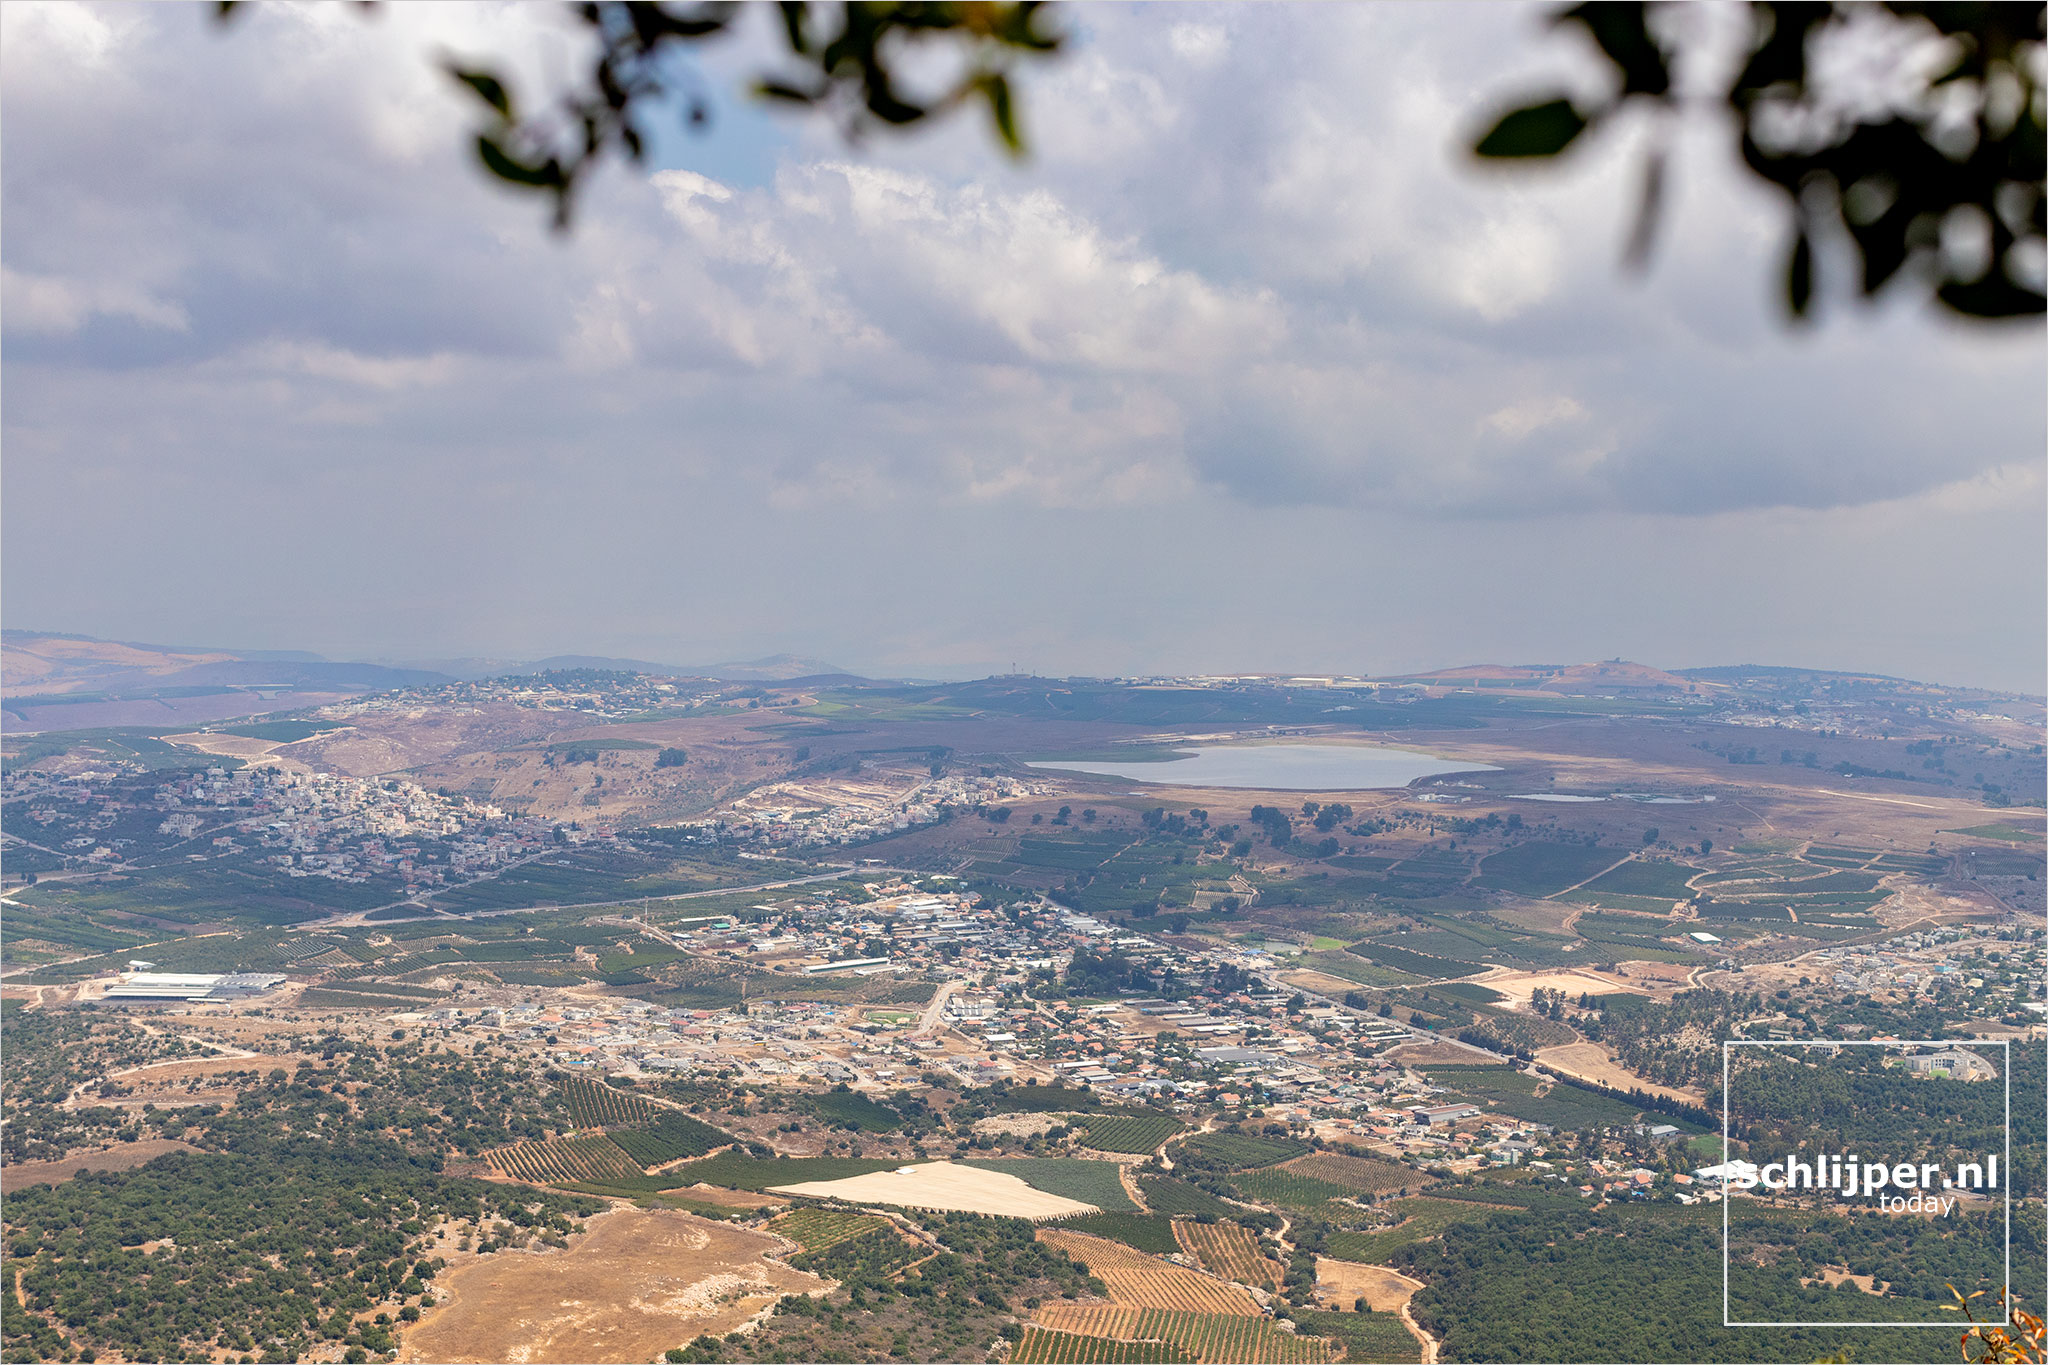 Israel, Meron Mountain, 23 augustus 2022